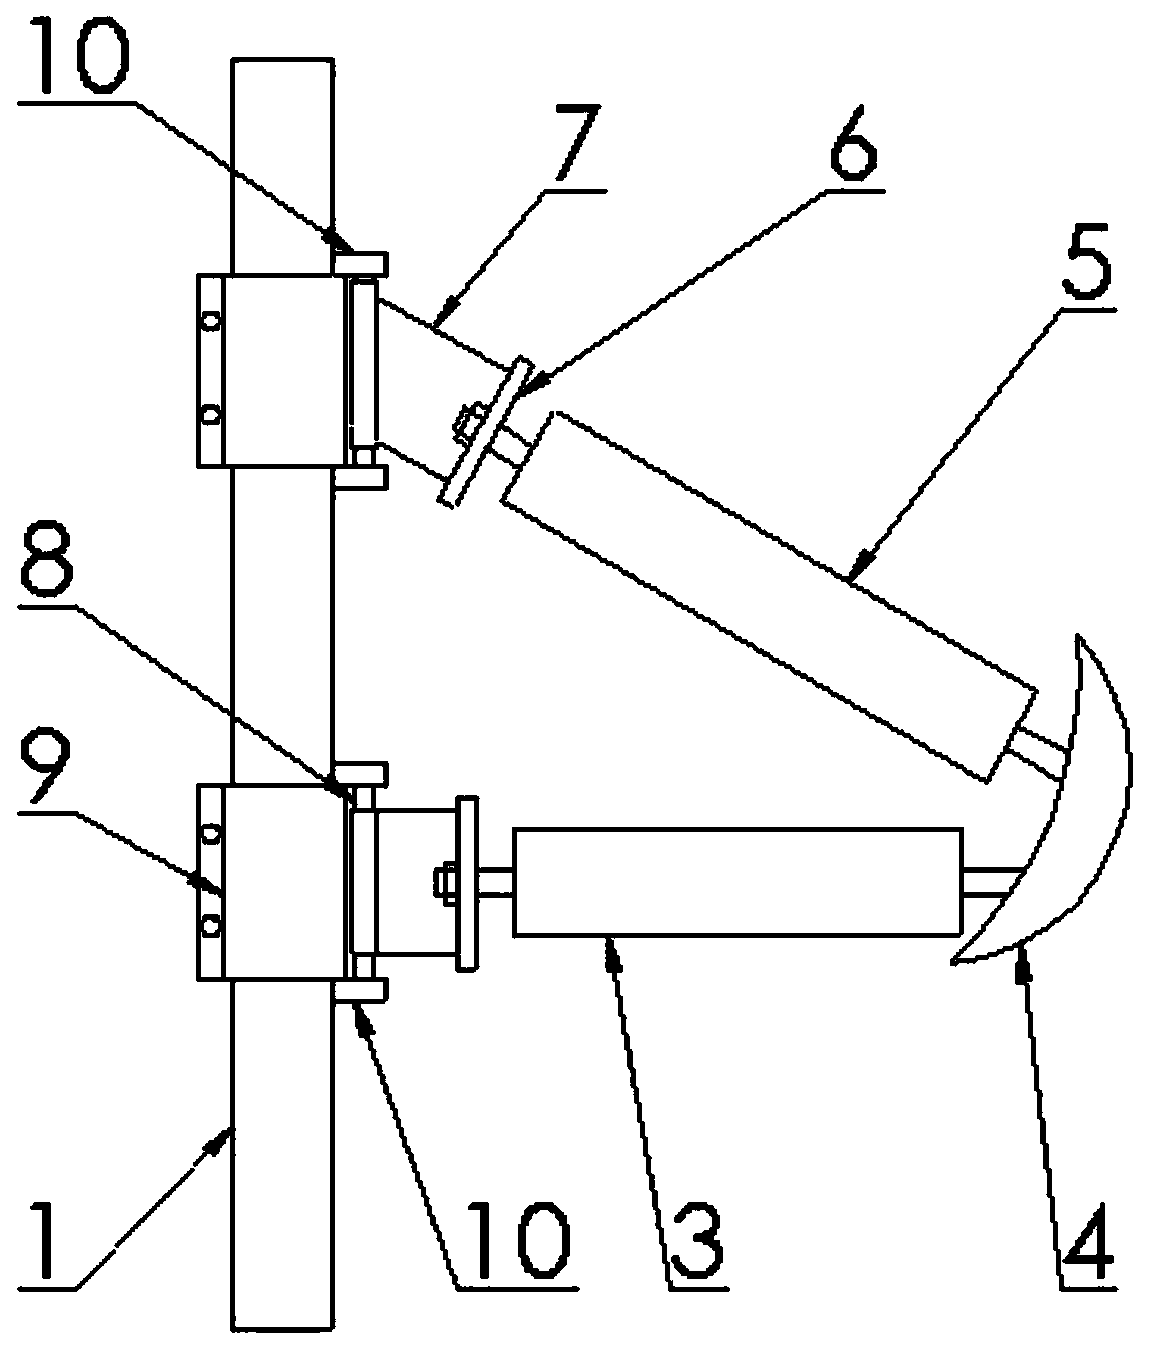 Composite rotary cross arm